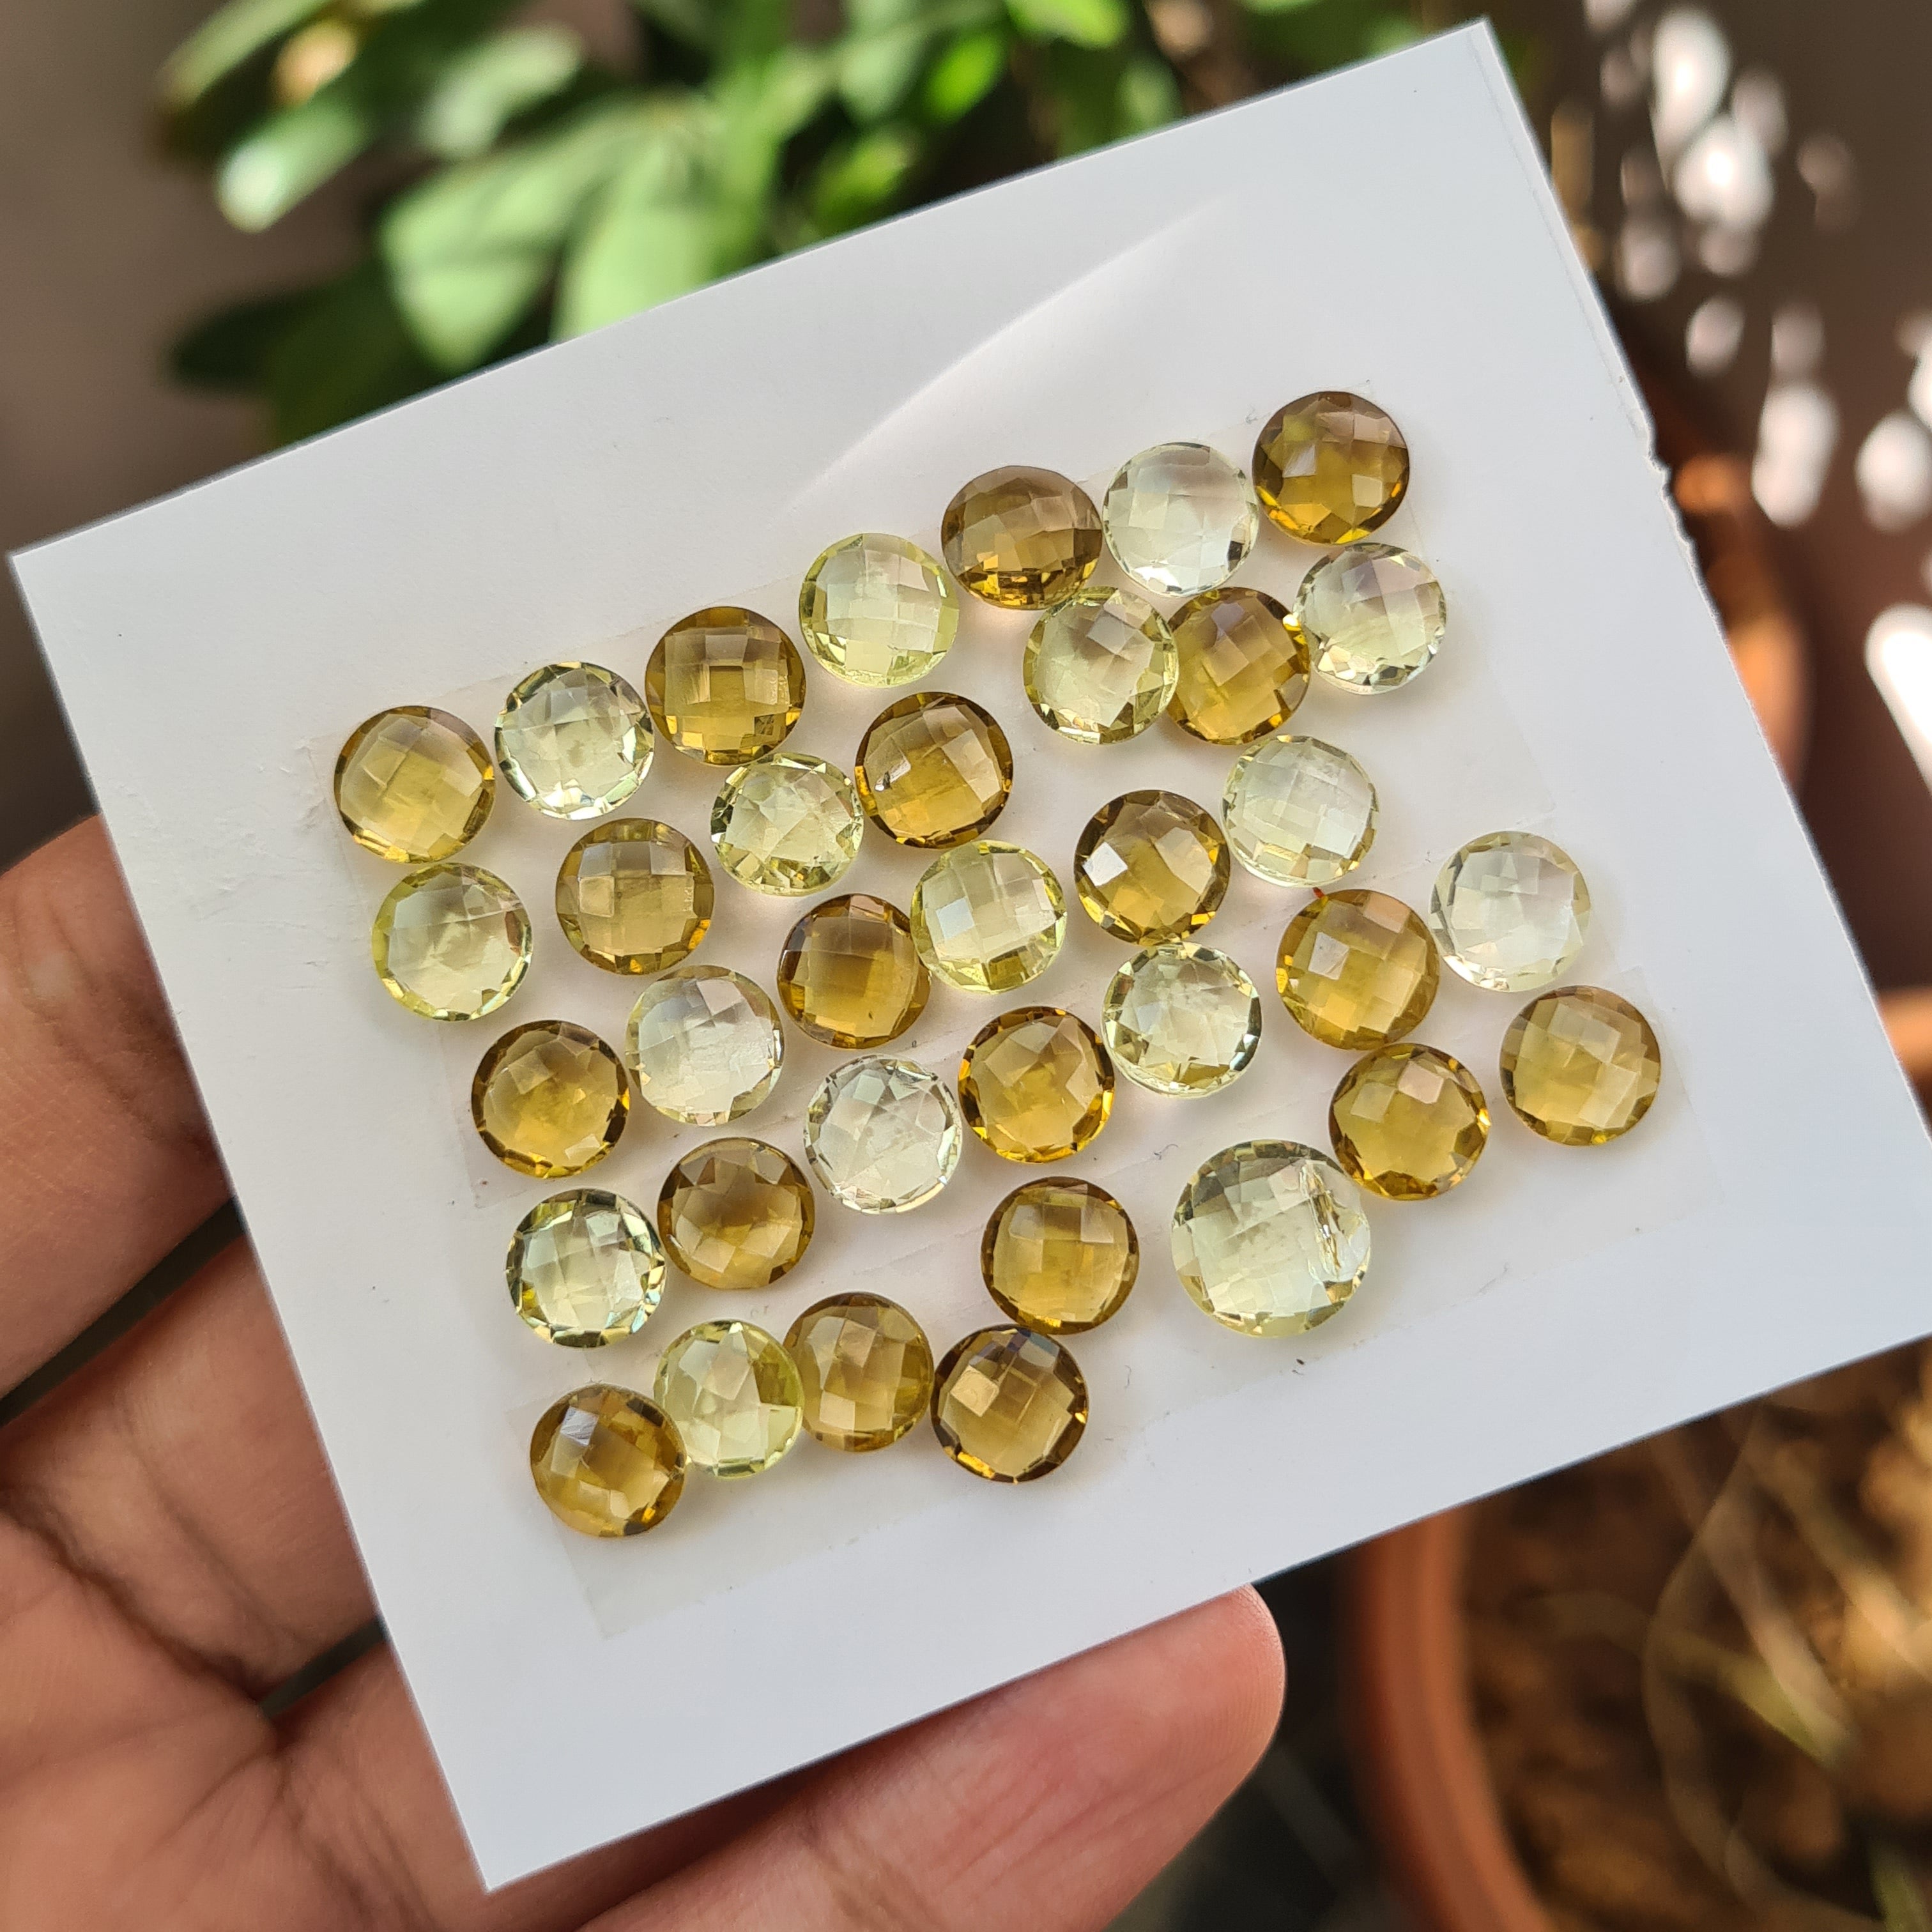 35 Pcs Natural Lemon Quartz Rose Cut Gemstones Round Shape Size: 8mm to 10mm - The LabradoriteKing